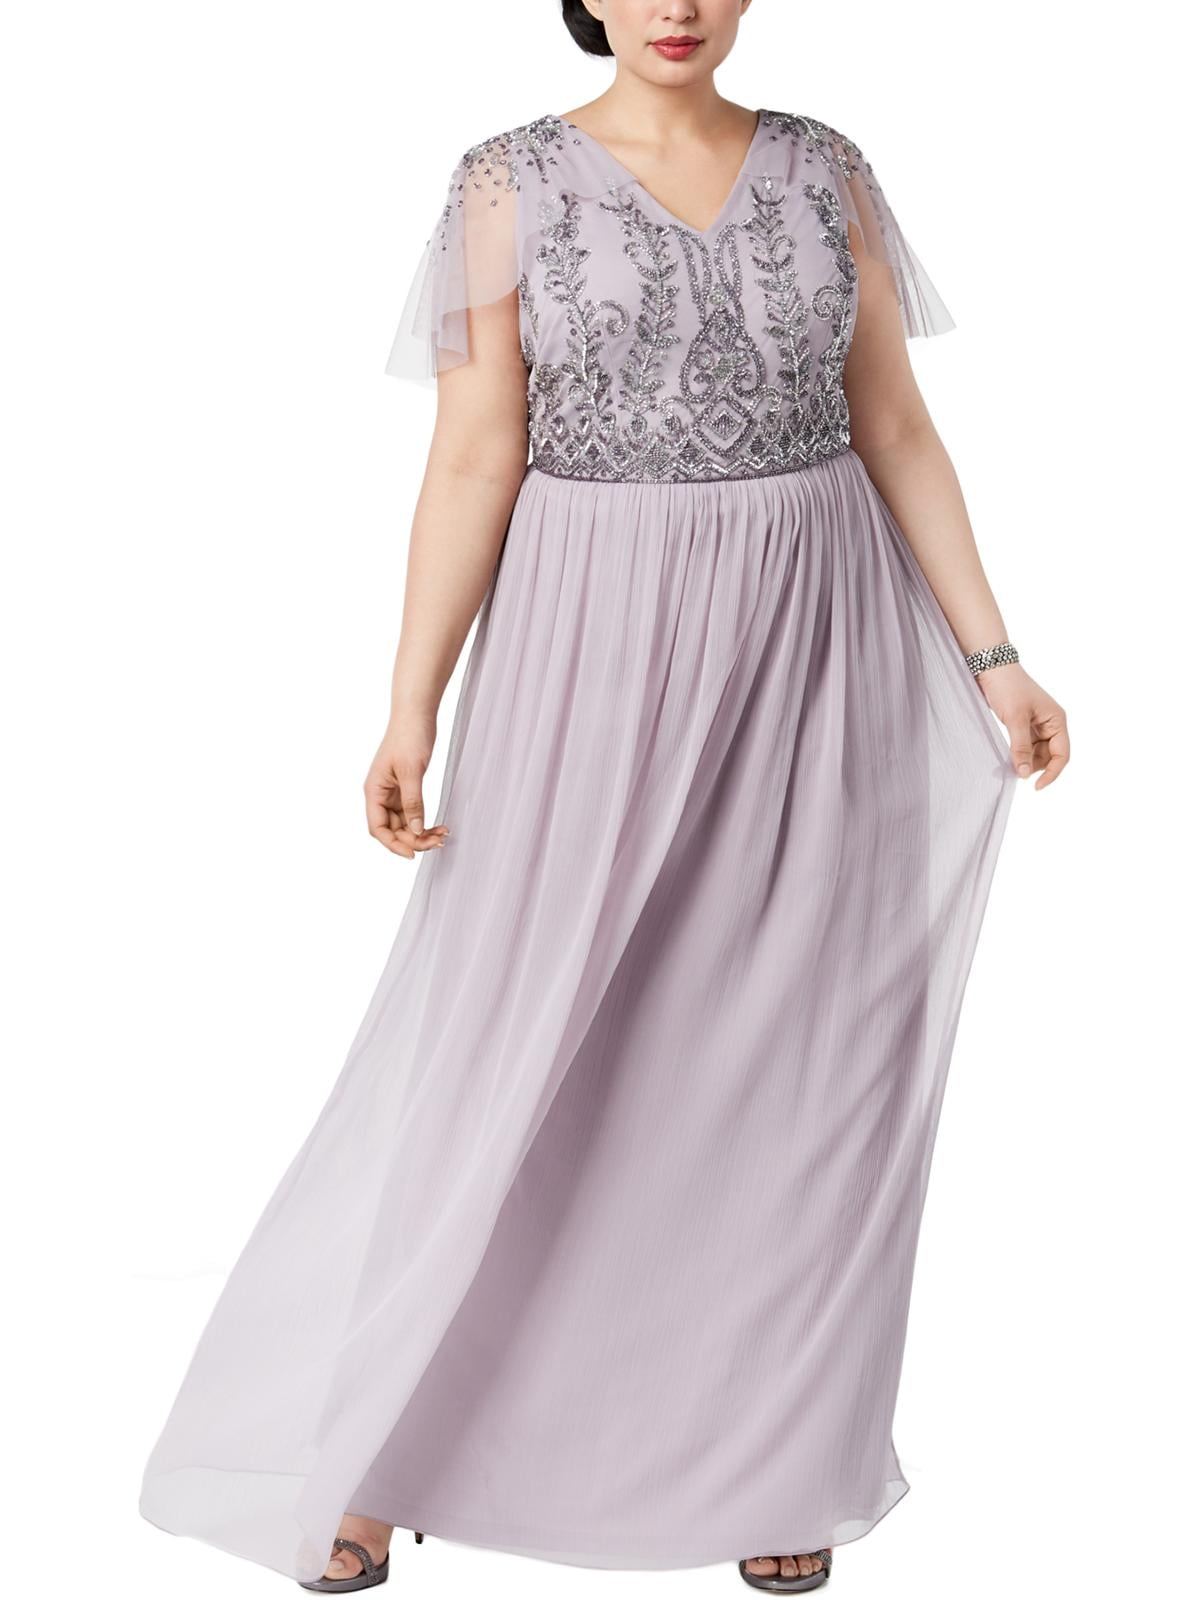 adrianna papell dresses on sale - sooojinlee.com.